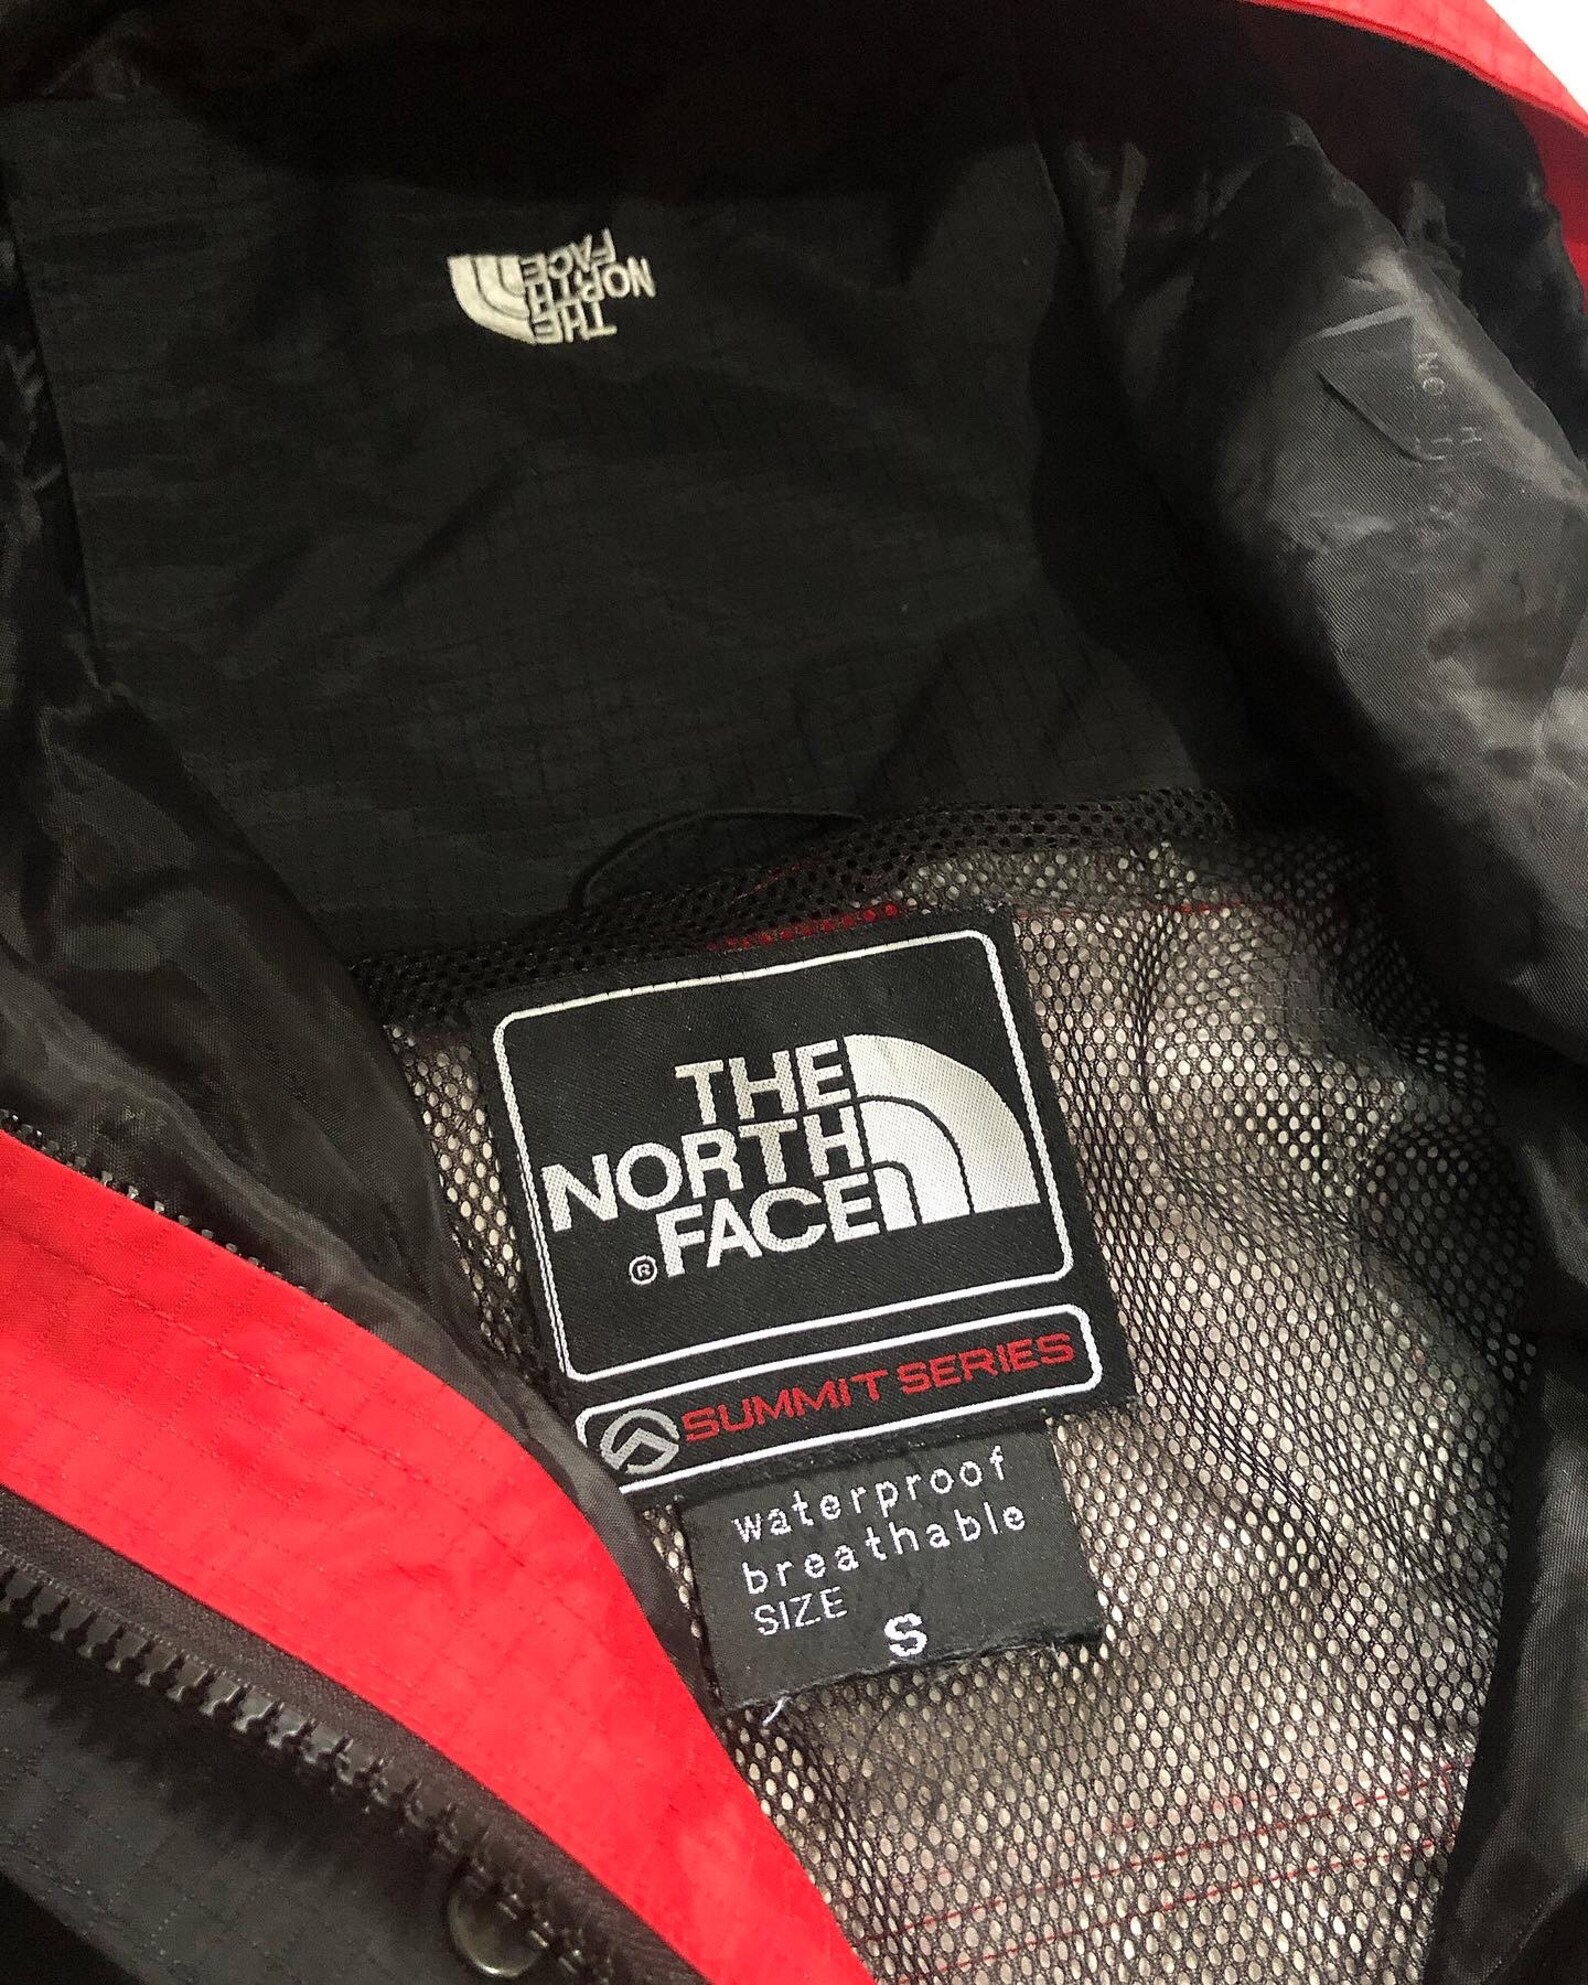 Vintage The North Face summit series jacket | Etsy